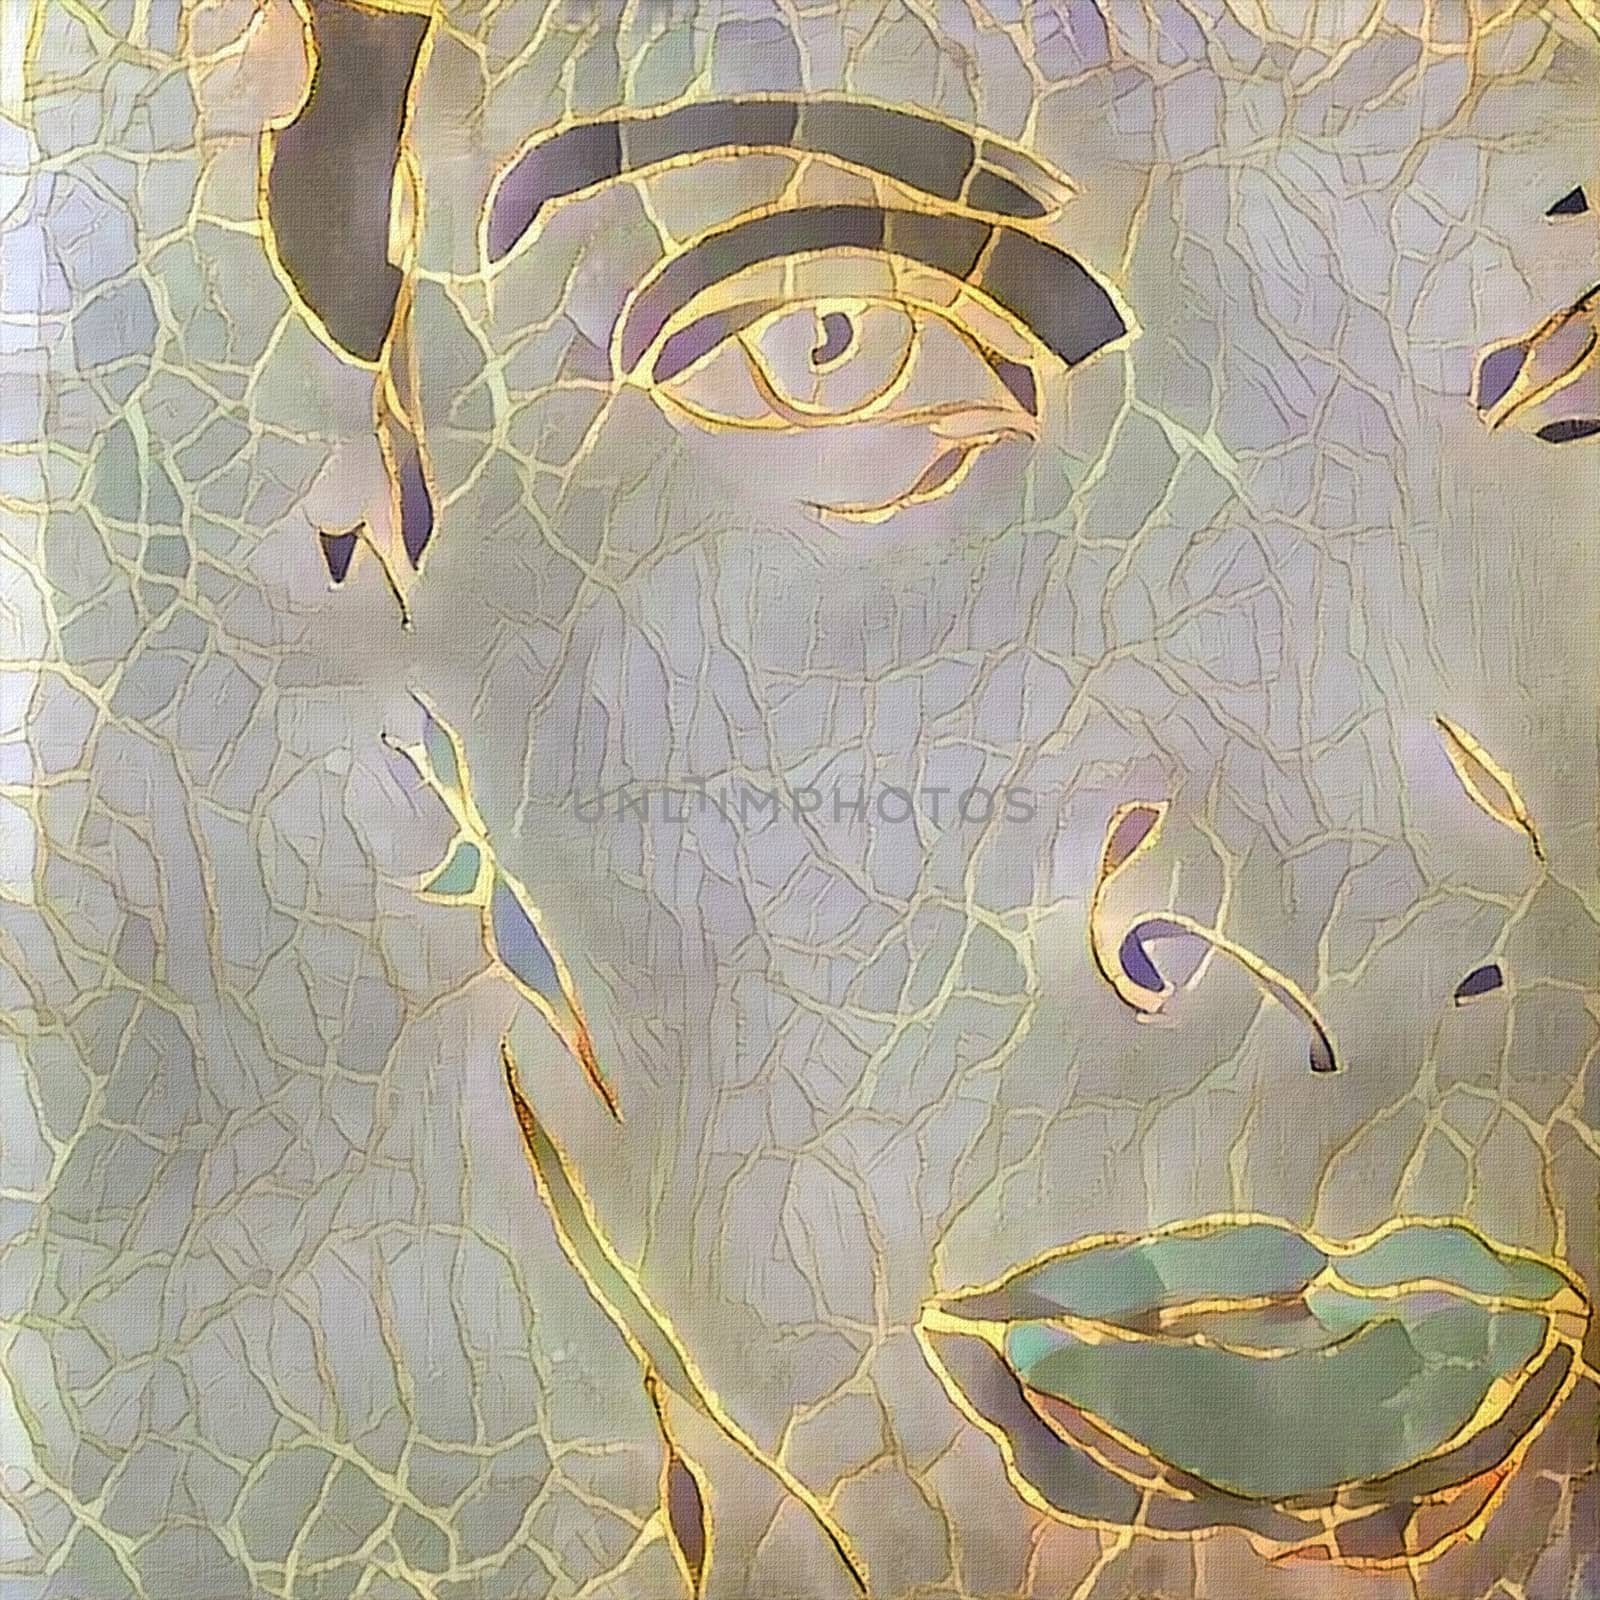 Modern digital painting. Woman's face